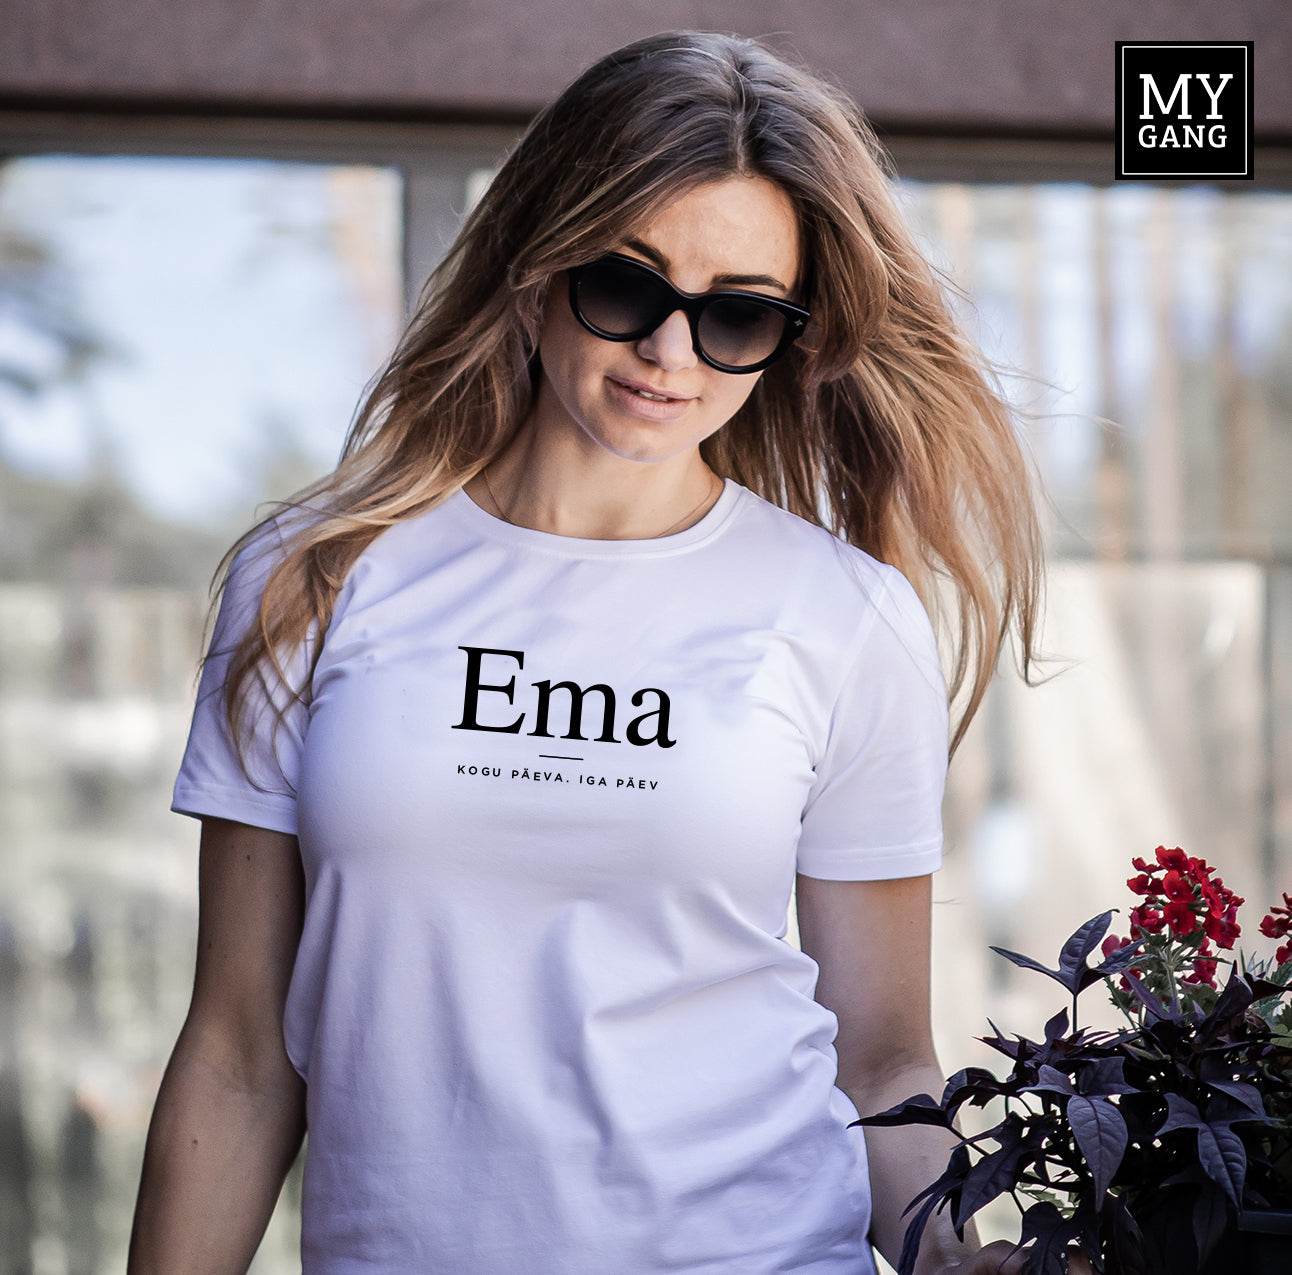 T-shirt set ISA | EMA